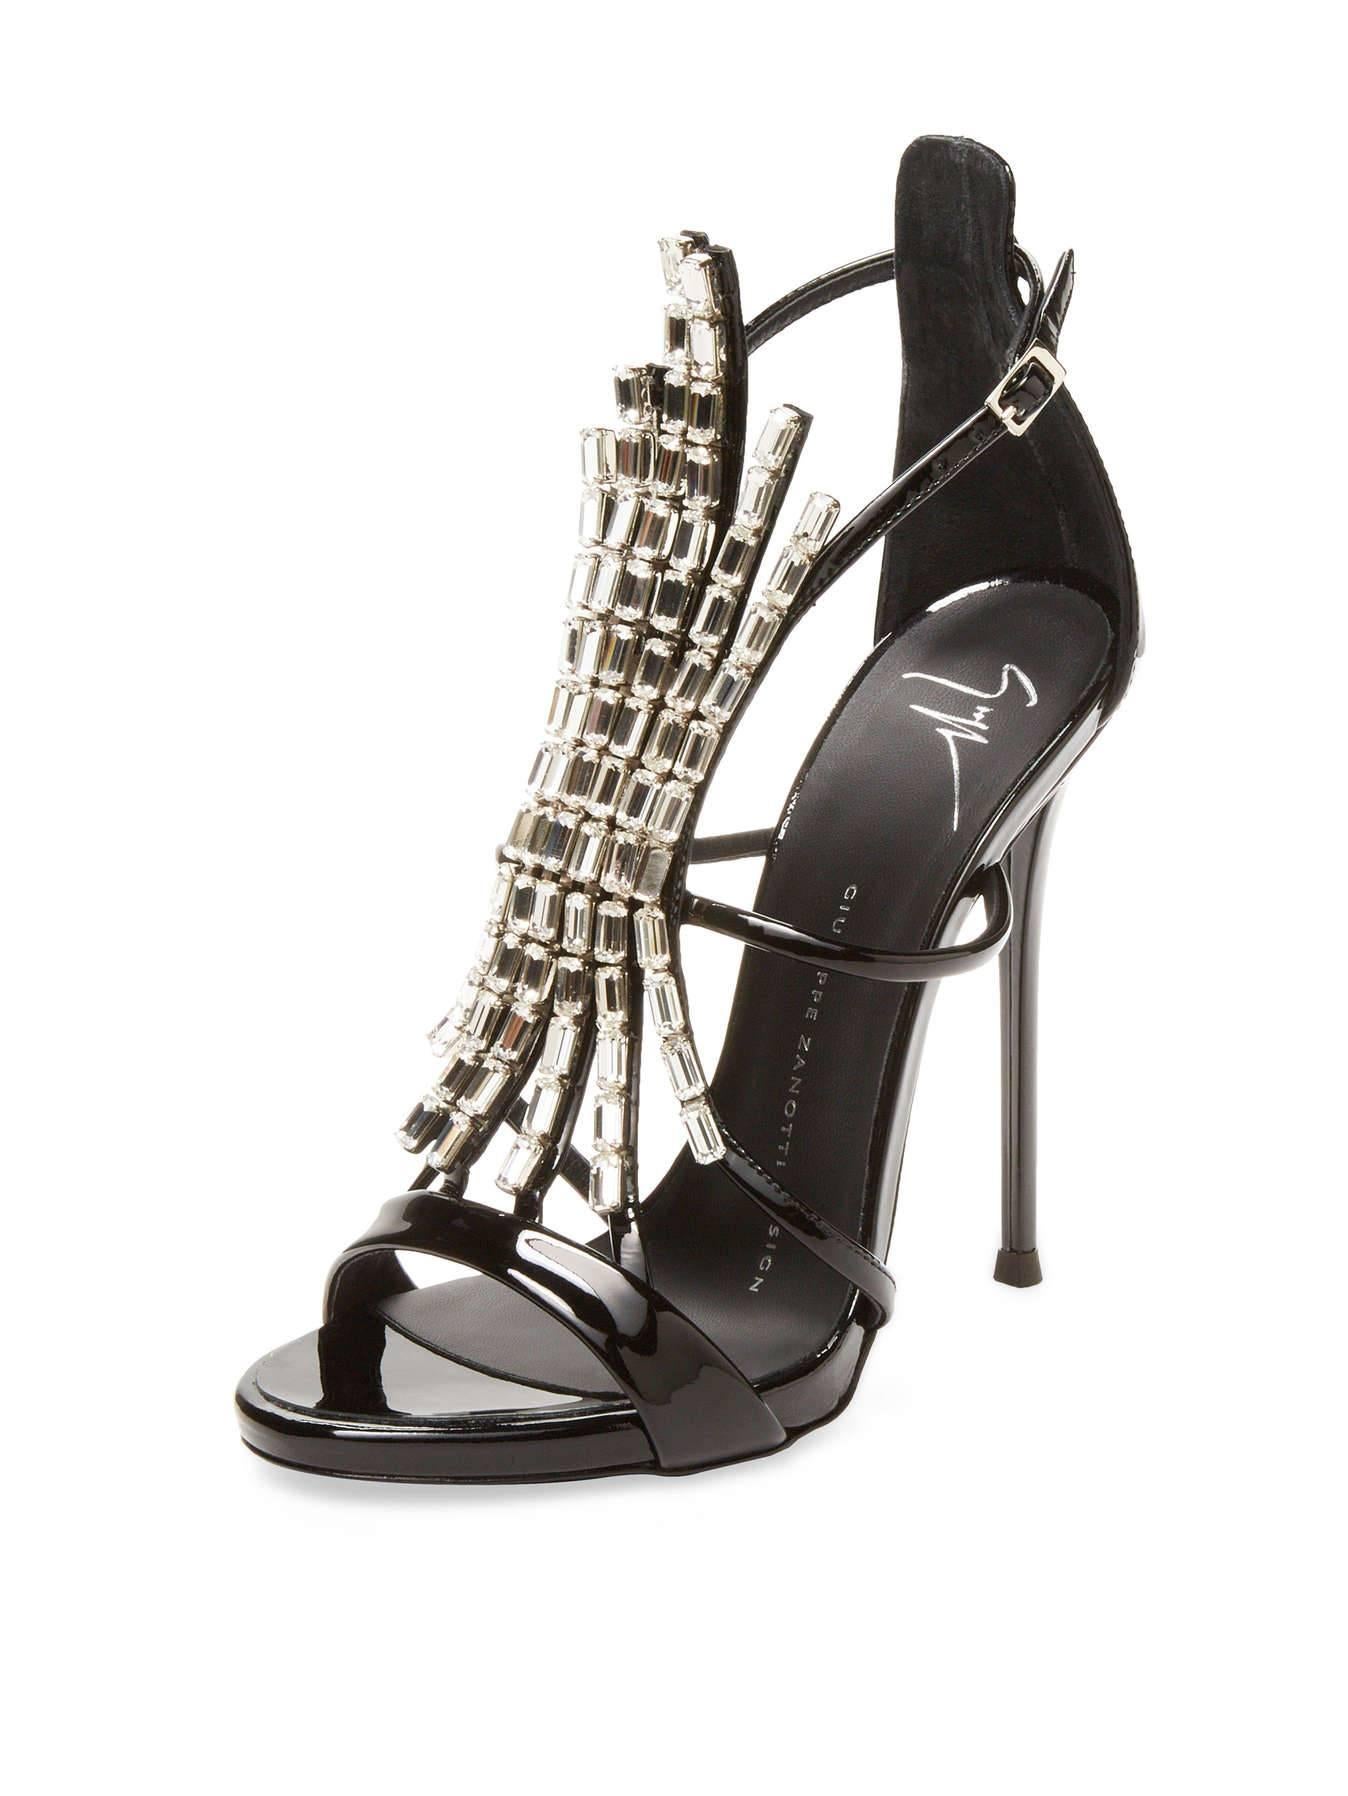 Women's Giuseppe Zanotti NEW Black Patent Jewel Crystal Evening Heels Sandals in Box